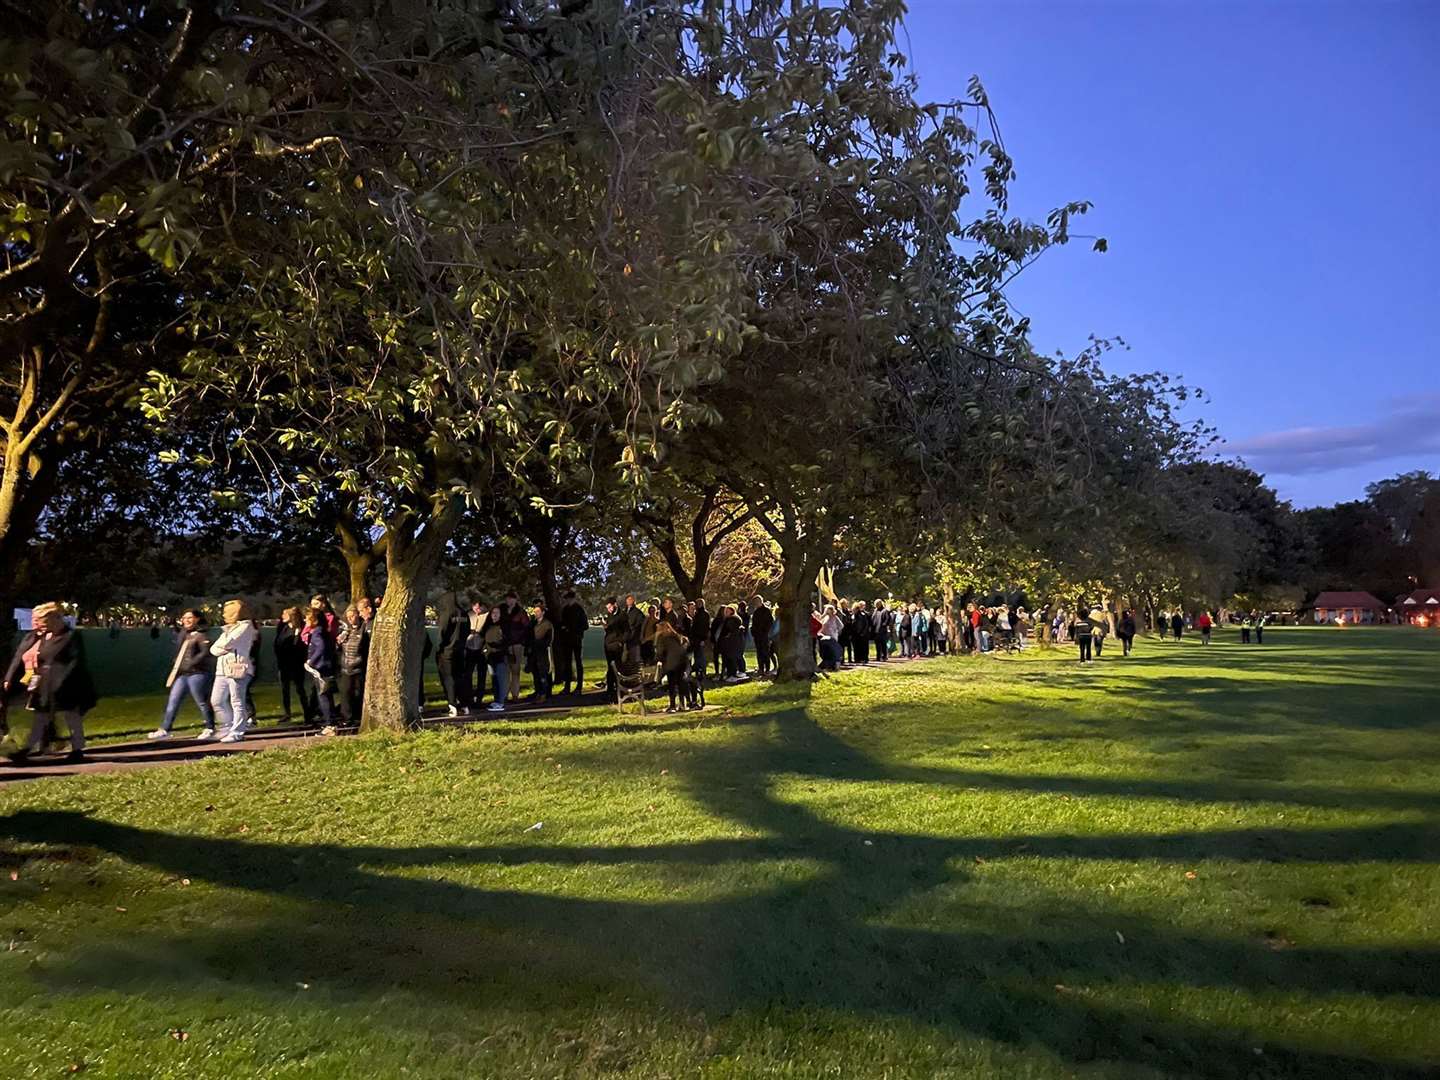 The queues grow all around the Meadows Park in Edinburgh.